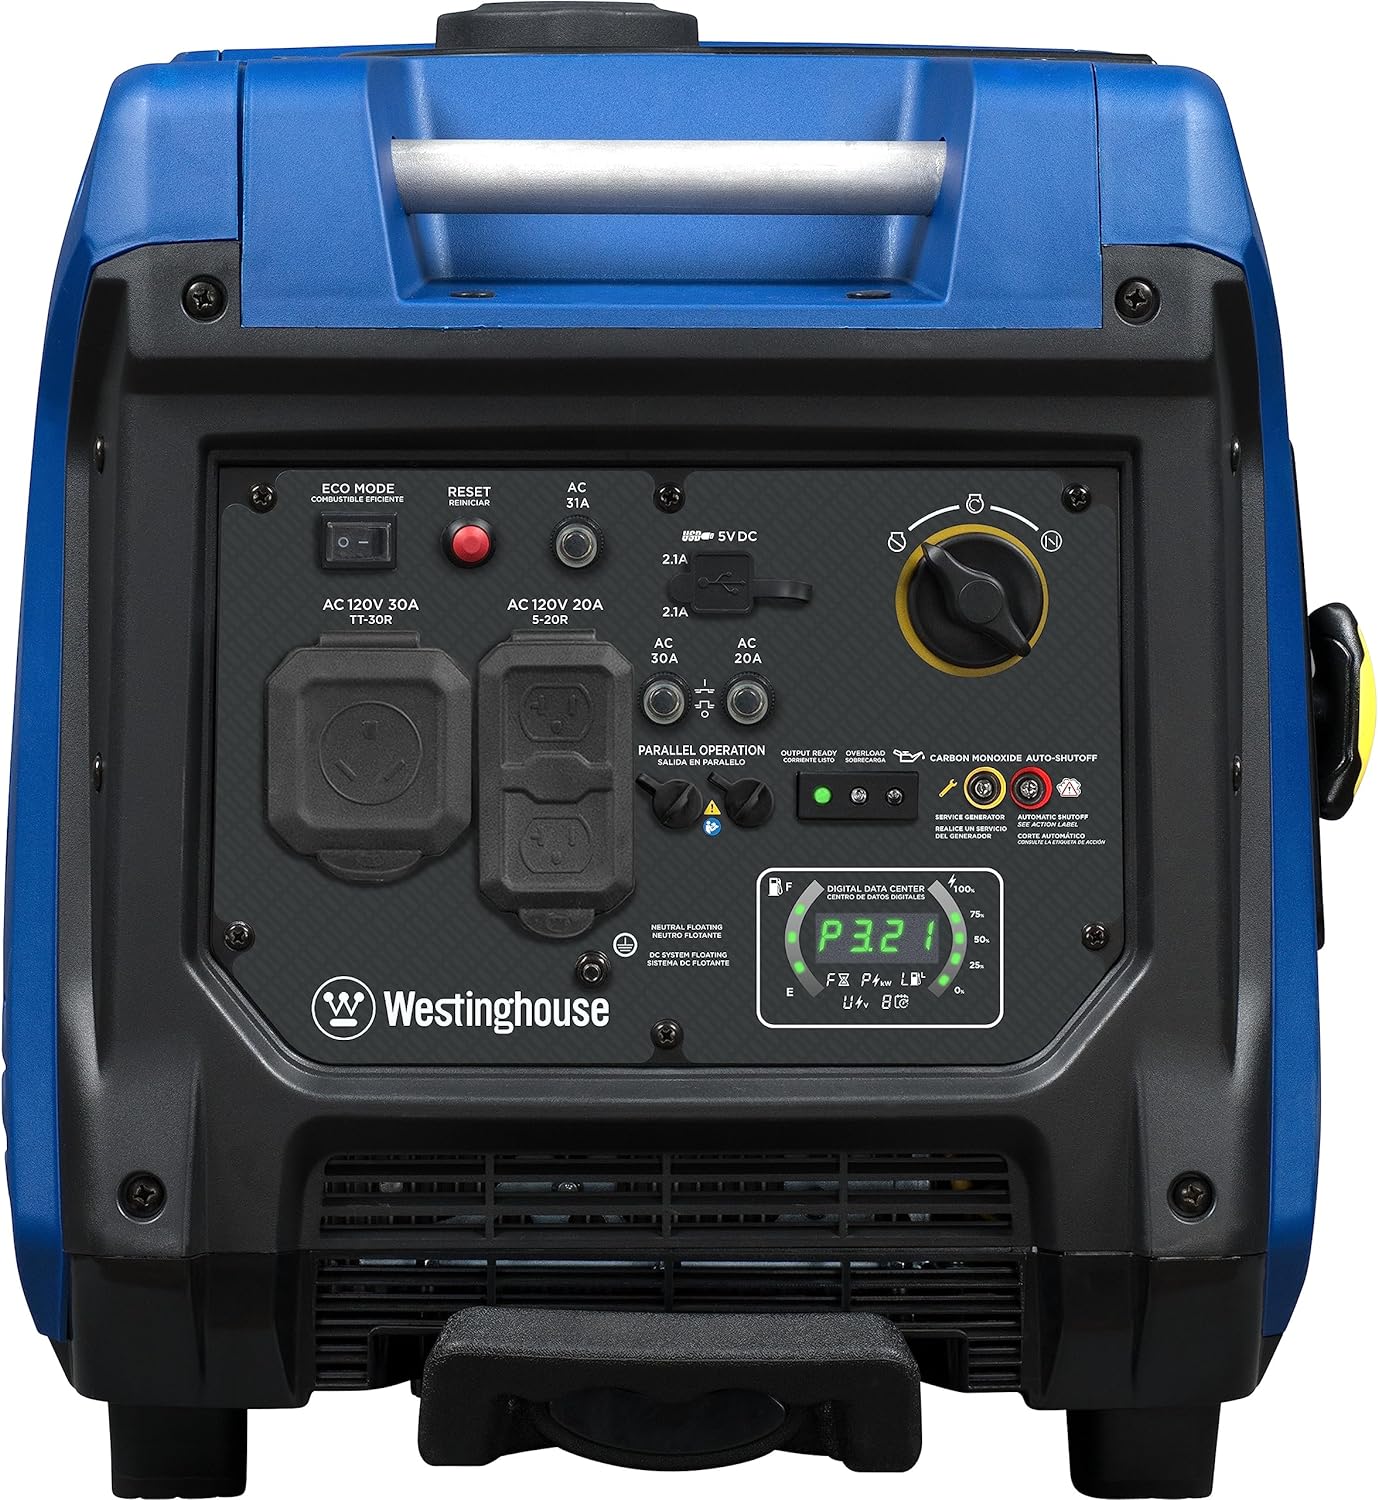 Westinghouse, Westinghouse iGen4500cv Inverter Generator 3700W/4500W 30 Amp Recoil Start Gas with CO Sensor New